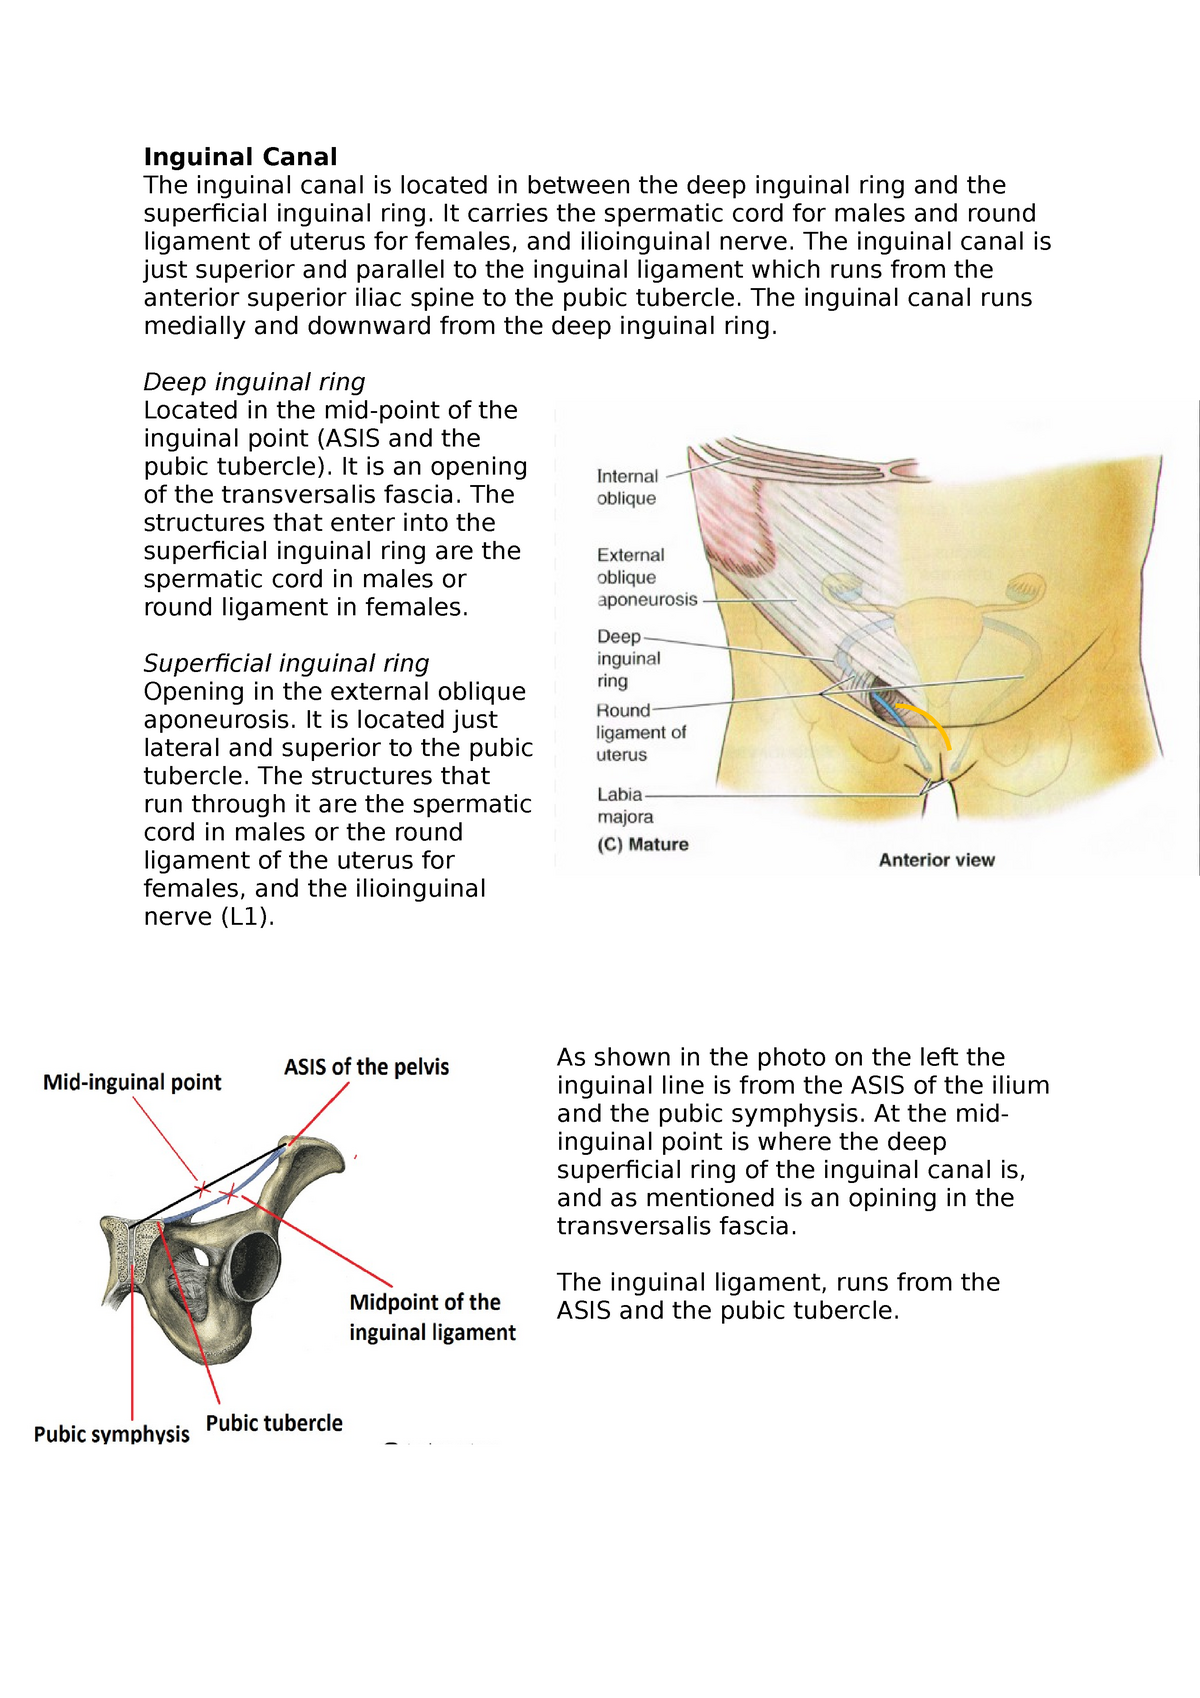 REV MED • Anatomy & Medical Education on Instagram: 